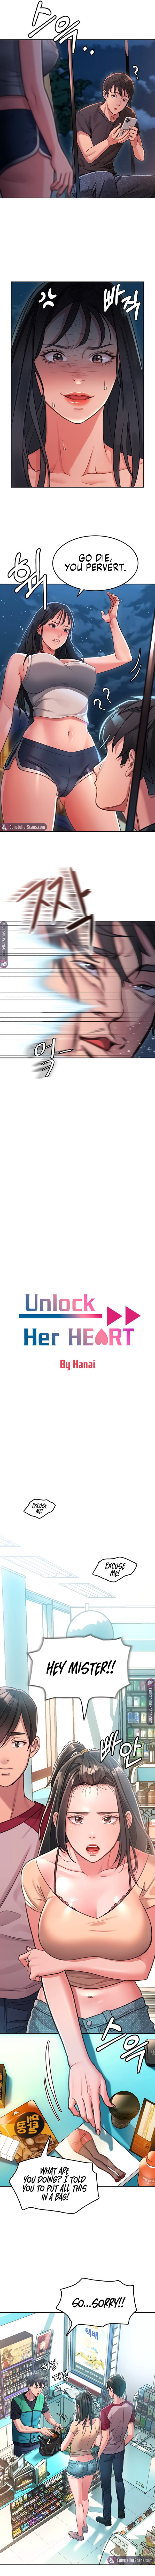 unlock-her-heart-chap-1-2